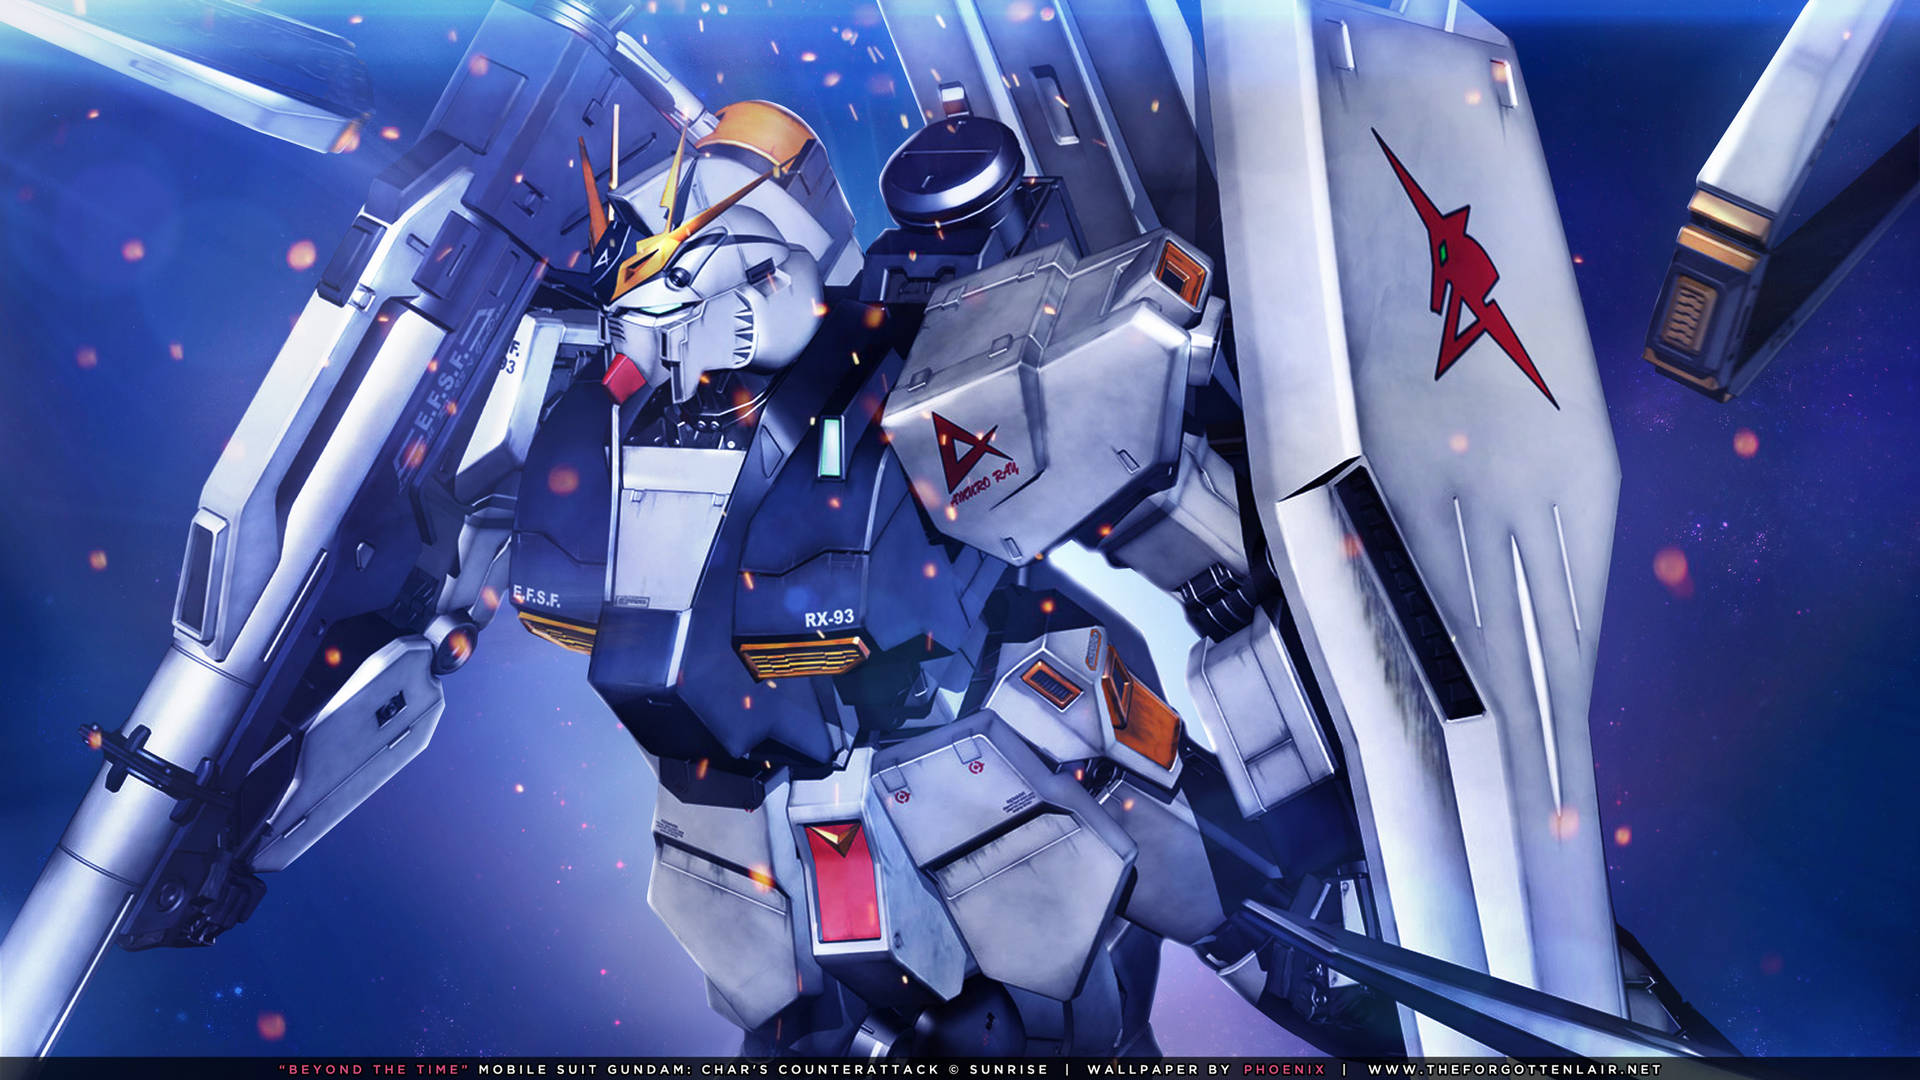 Gundam 2560X1440 Wallpaper and Background Image